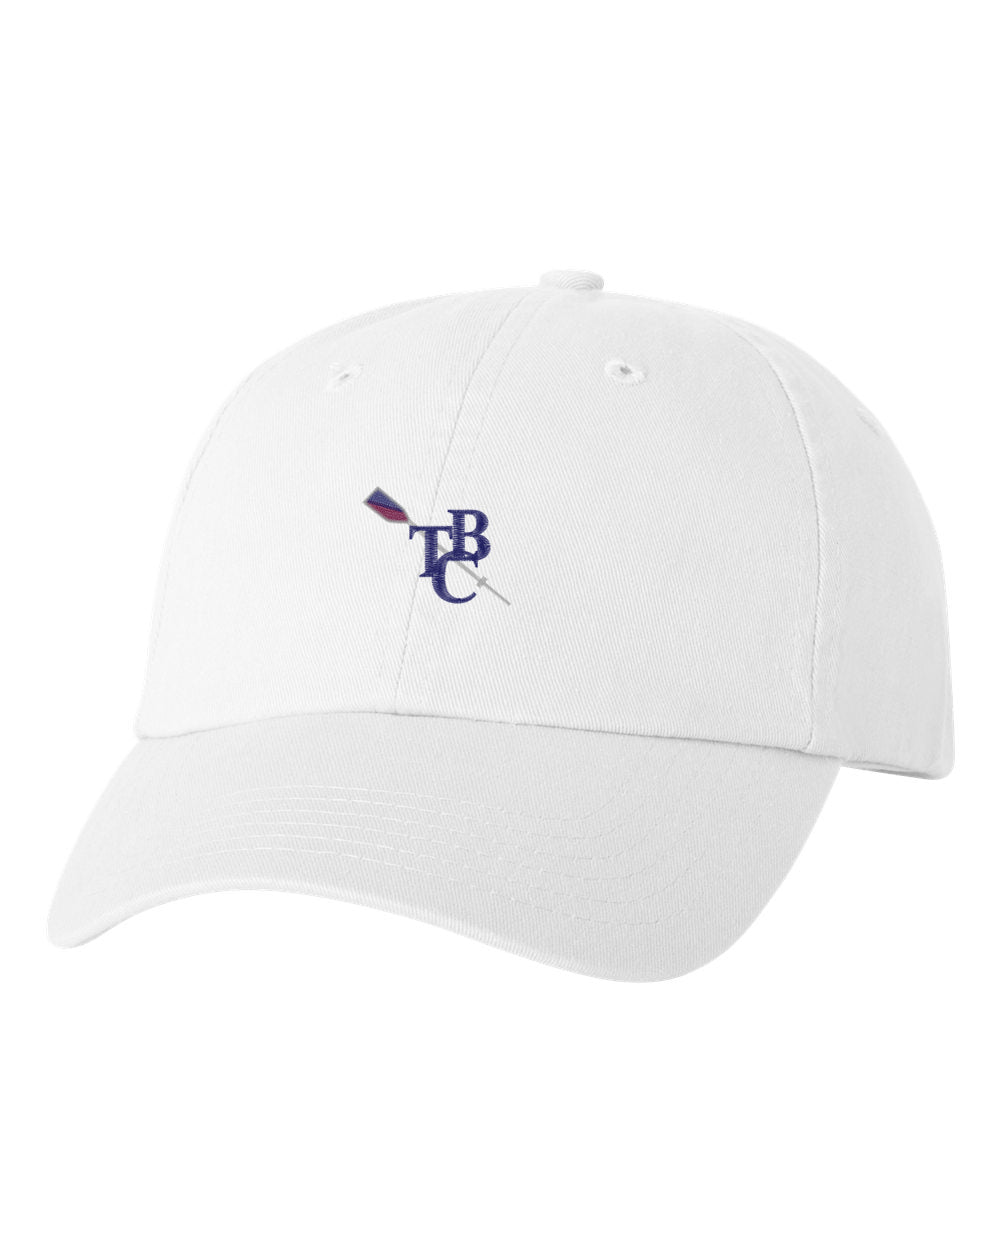 TBC Cotton Twill Hat